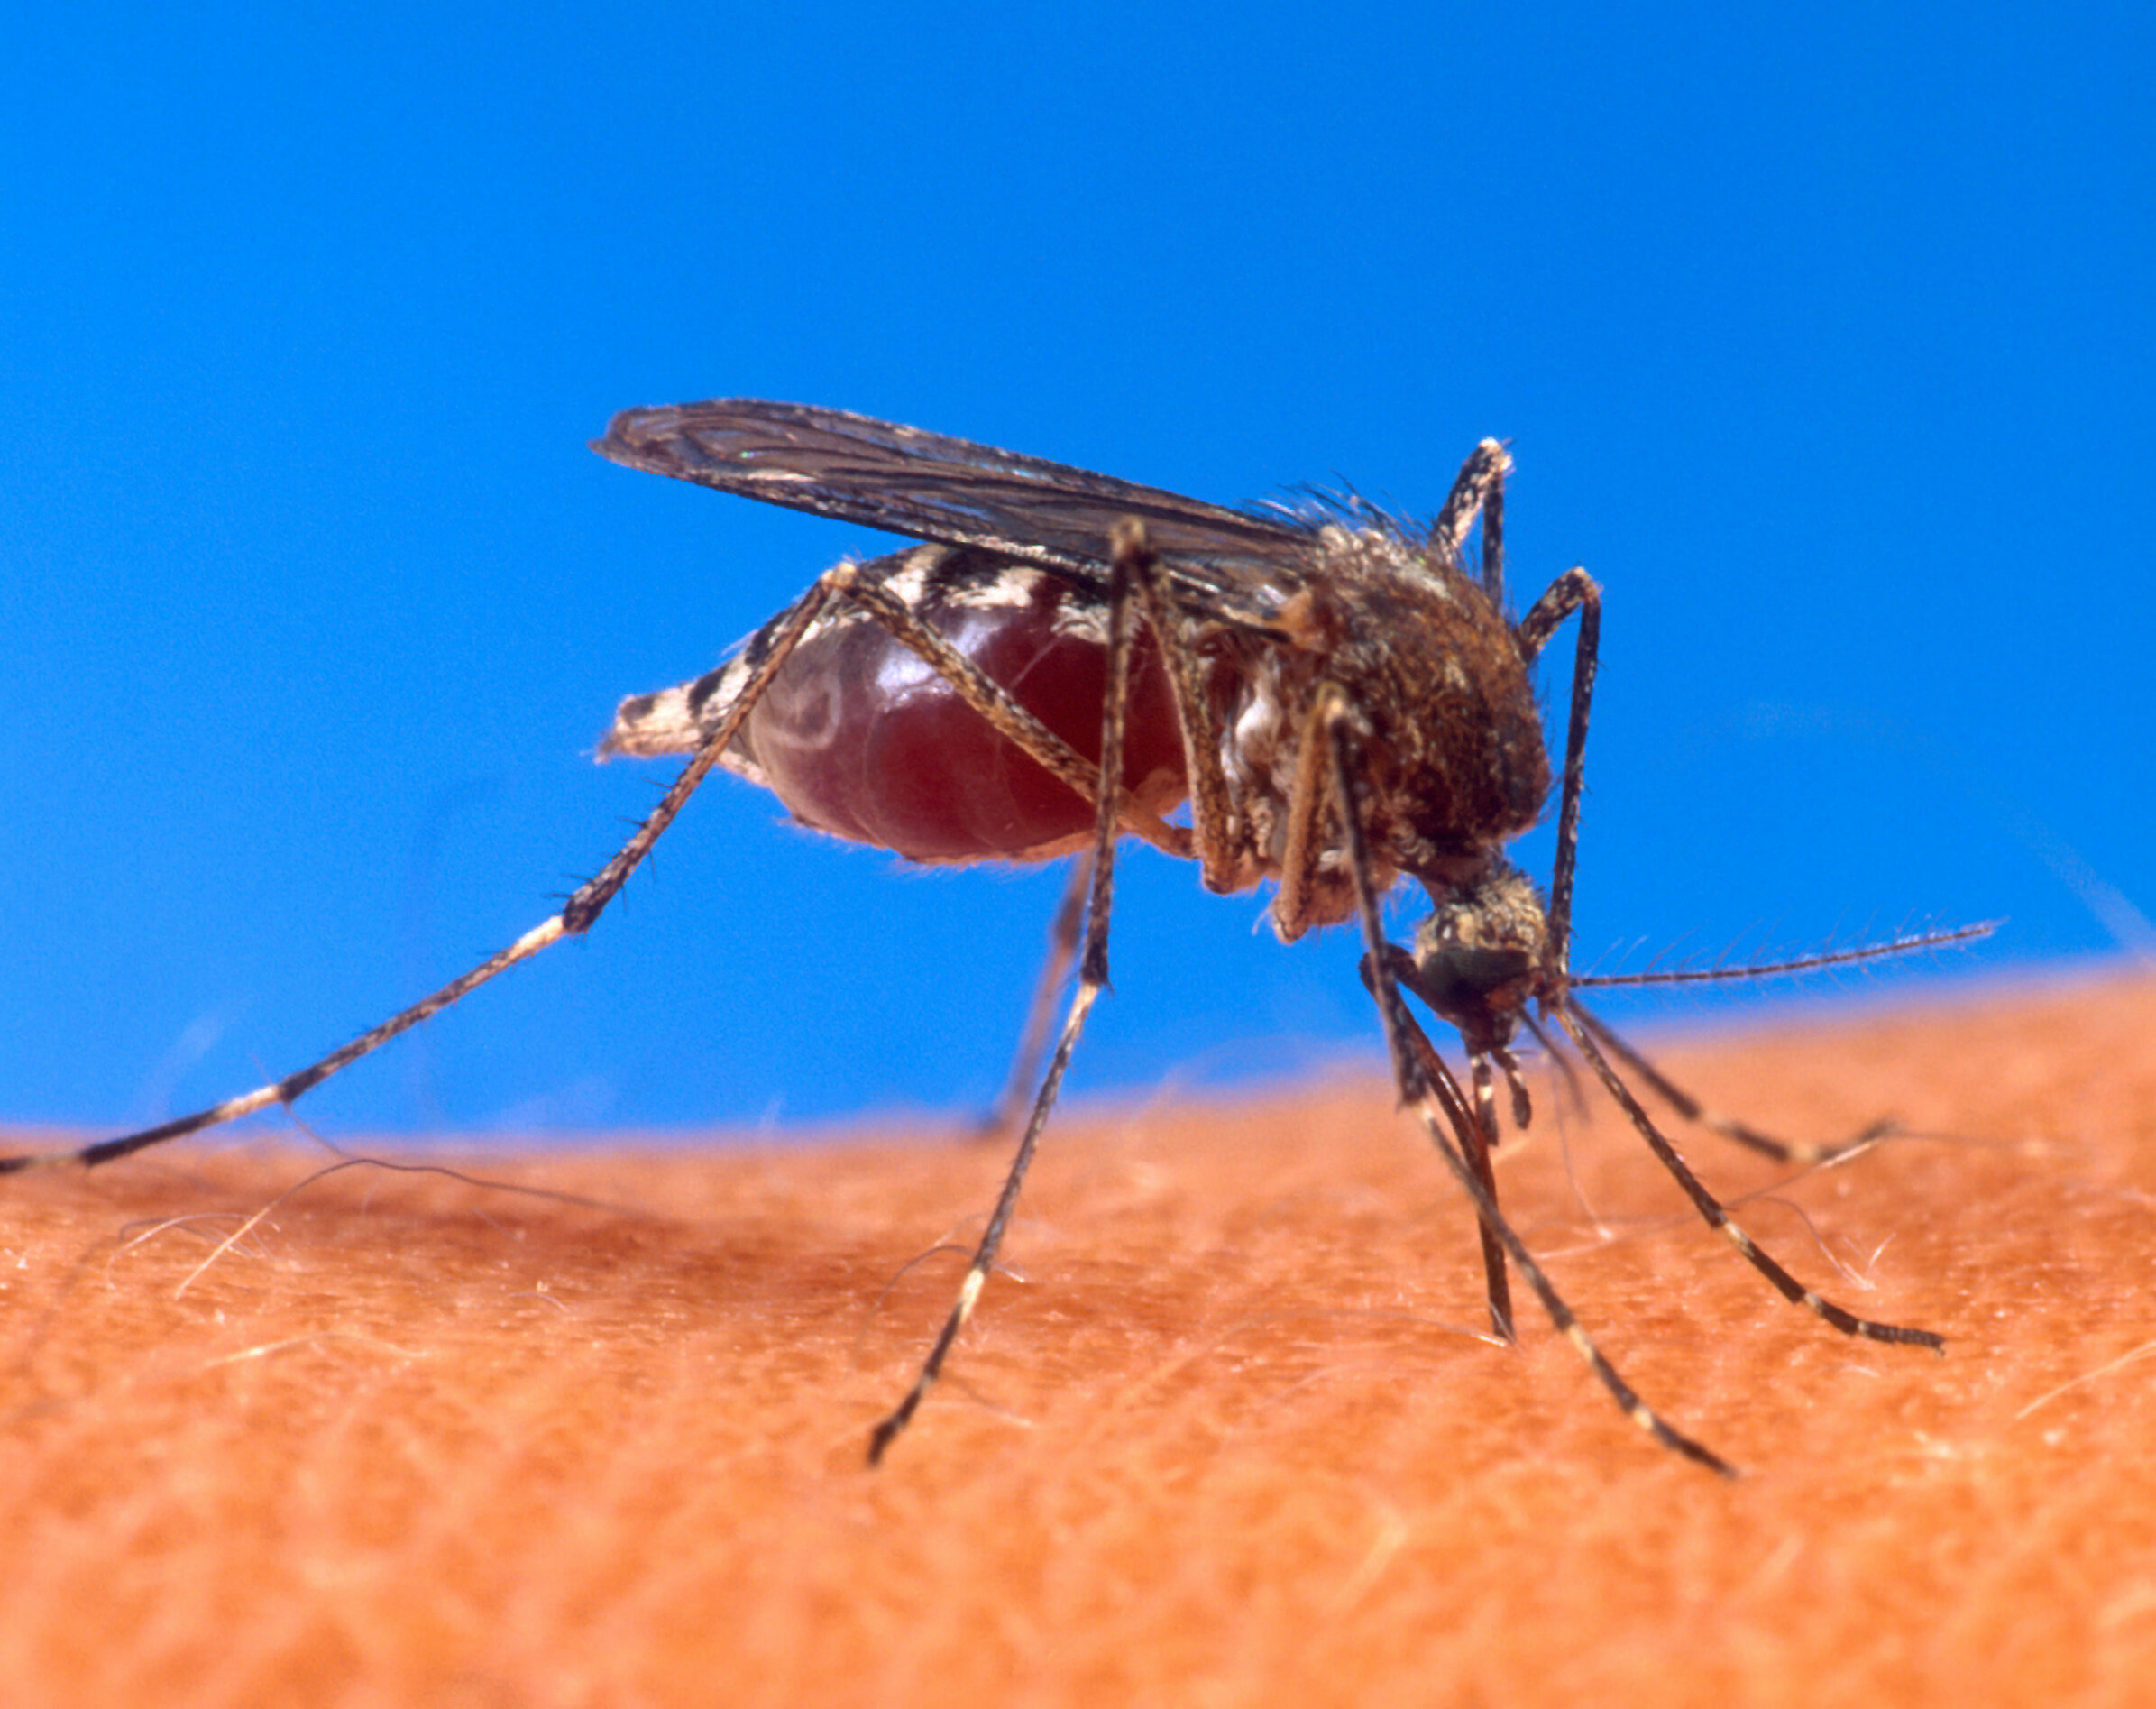 Aedes_aegypti_biting_human.jpg